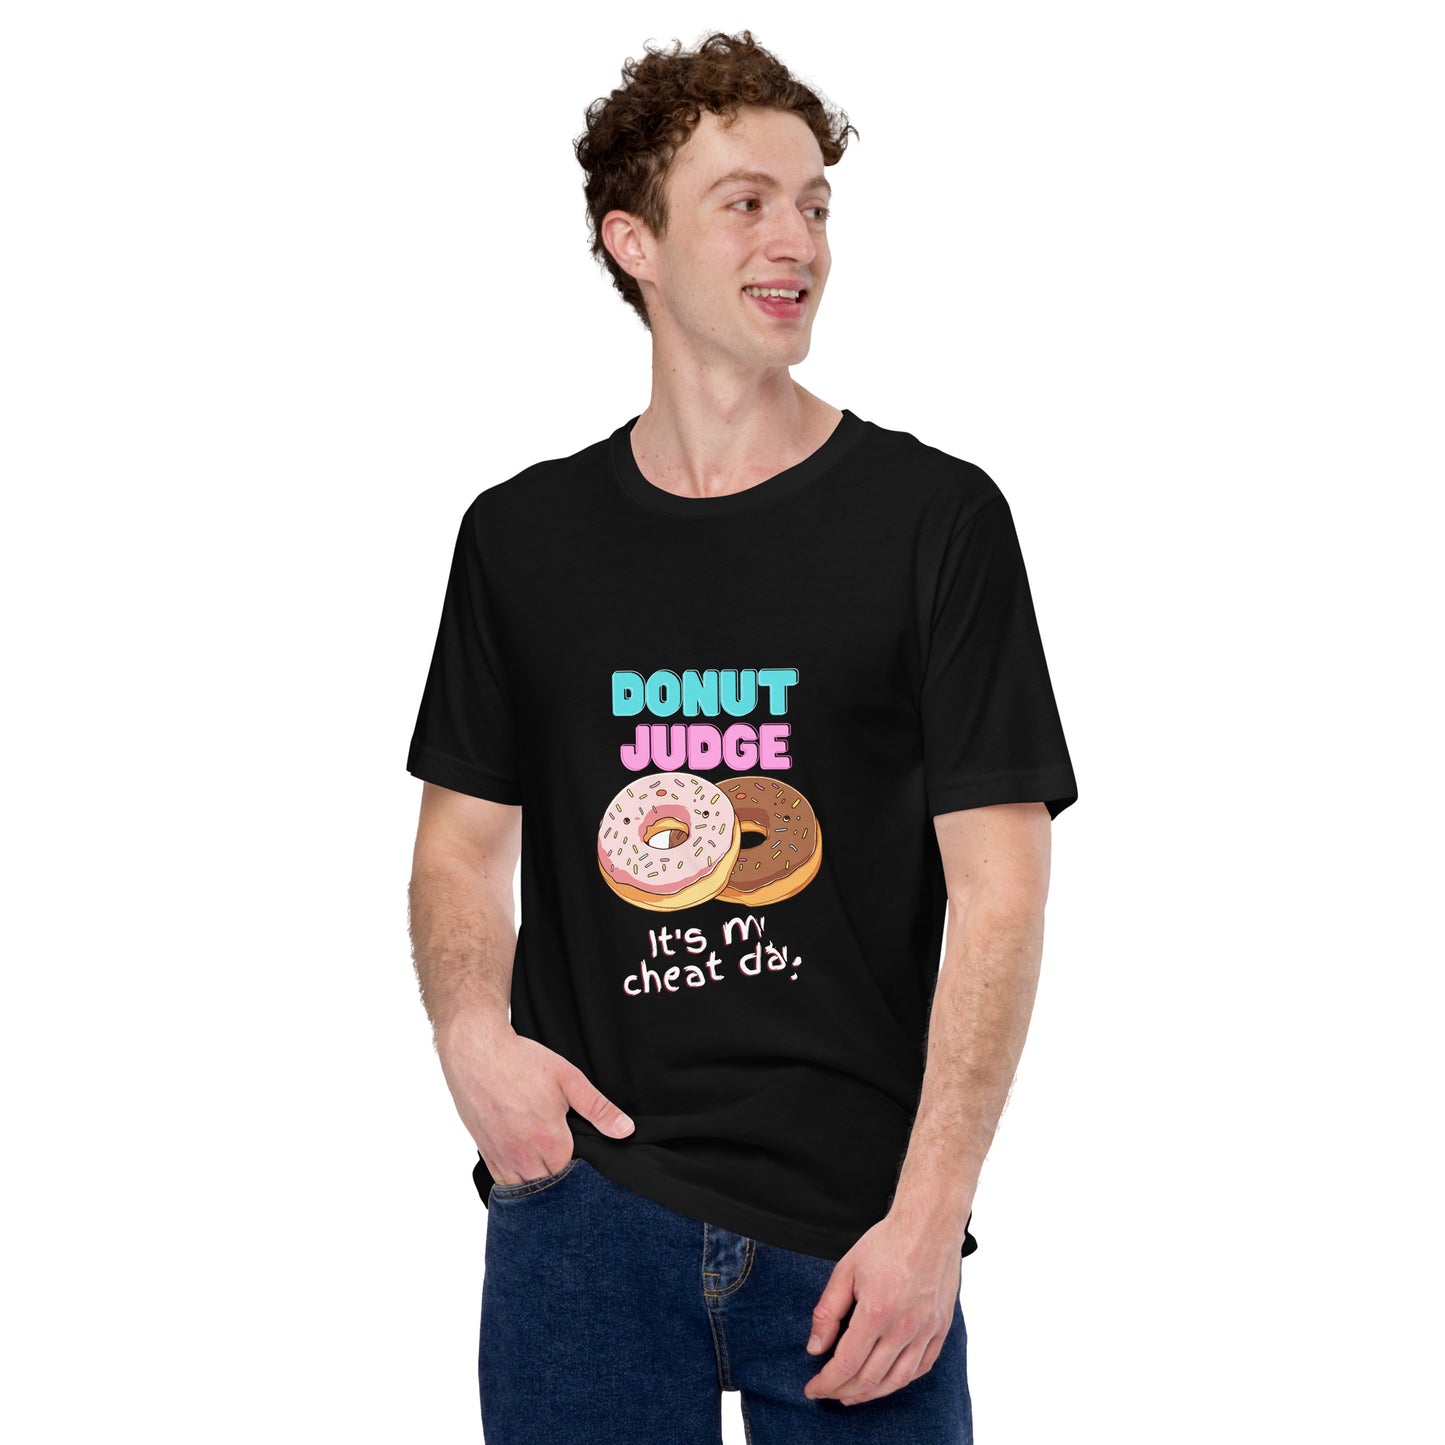 Donut Judge It's My Cheat Day T-shirt